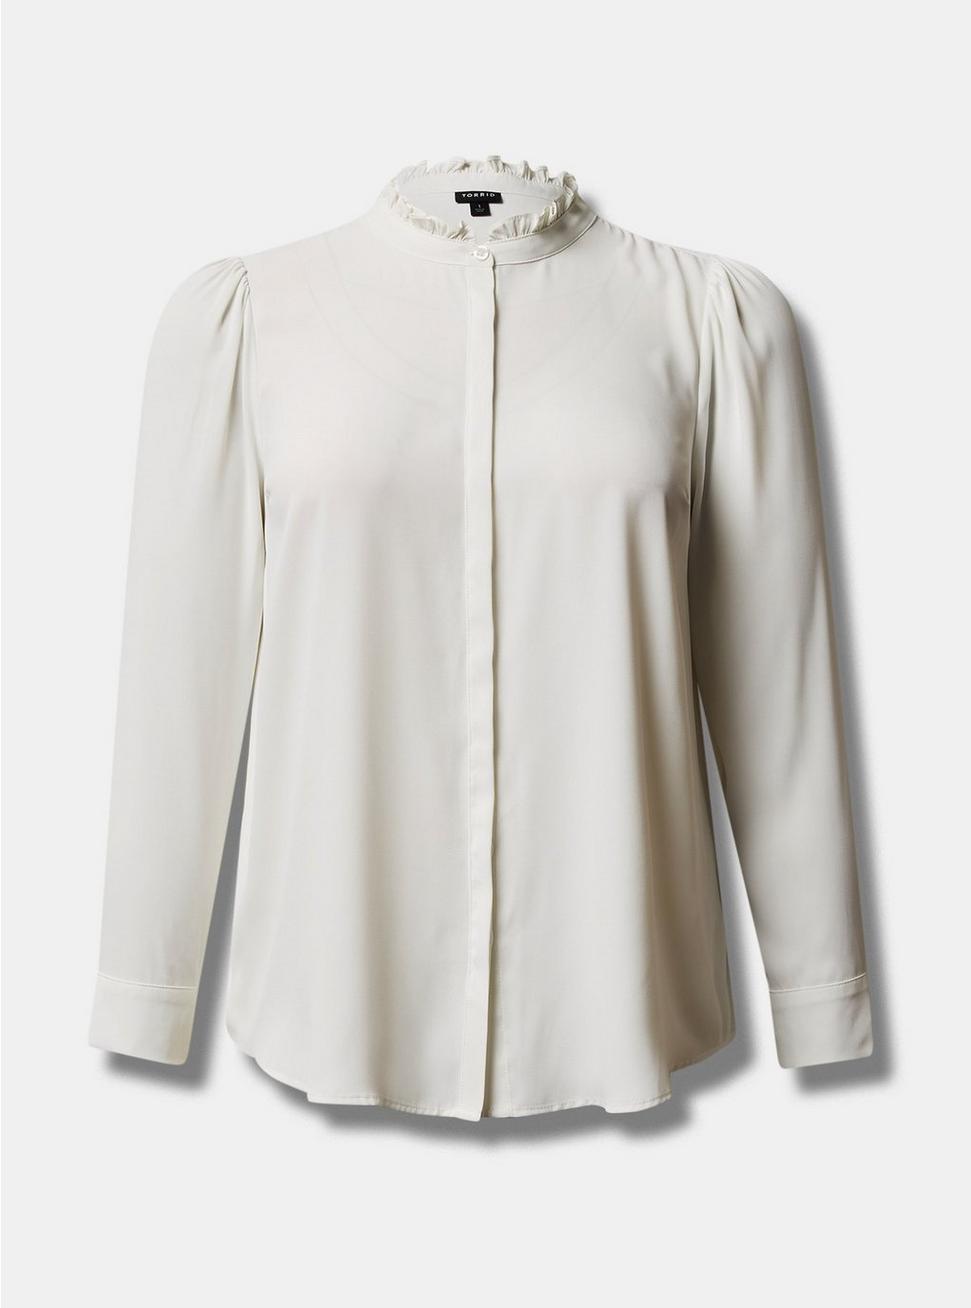 Madison Georgette Ruffle Mock Neck Button-Up Shirt, CLOUD DANCER, hi-res